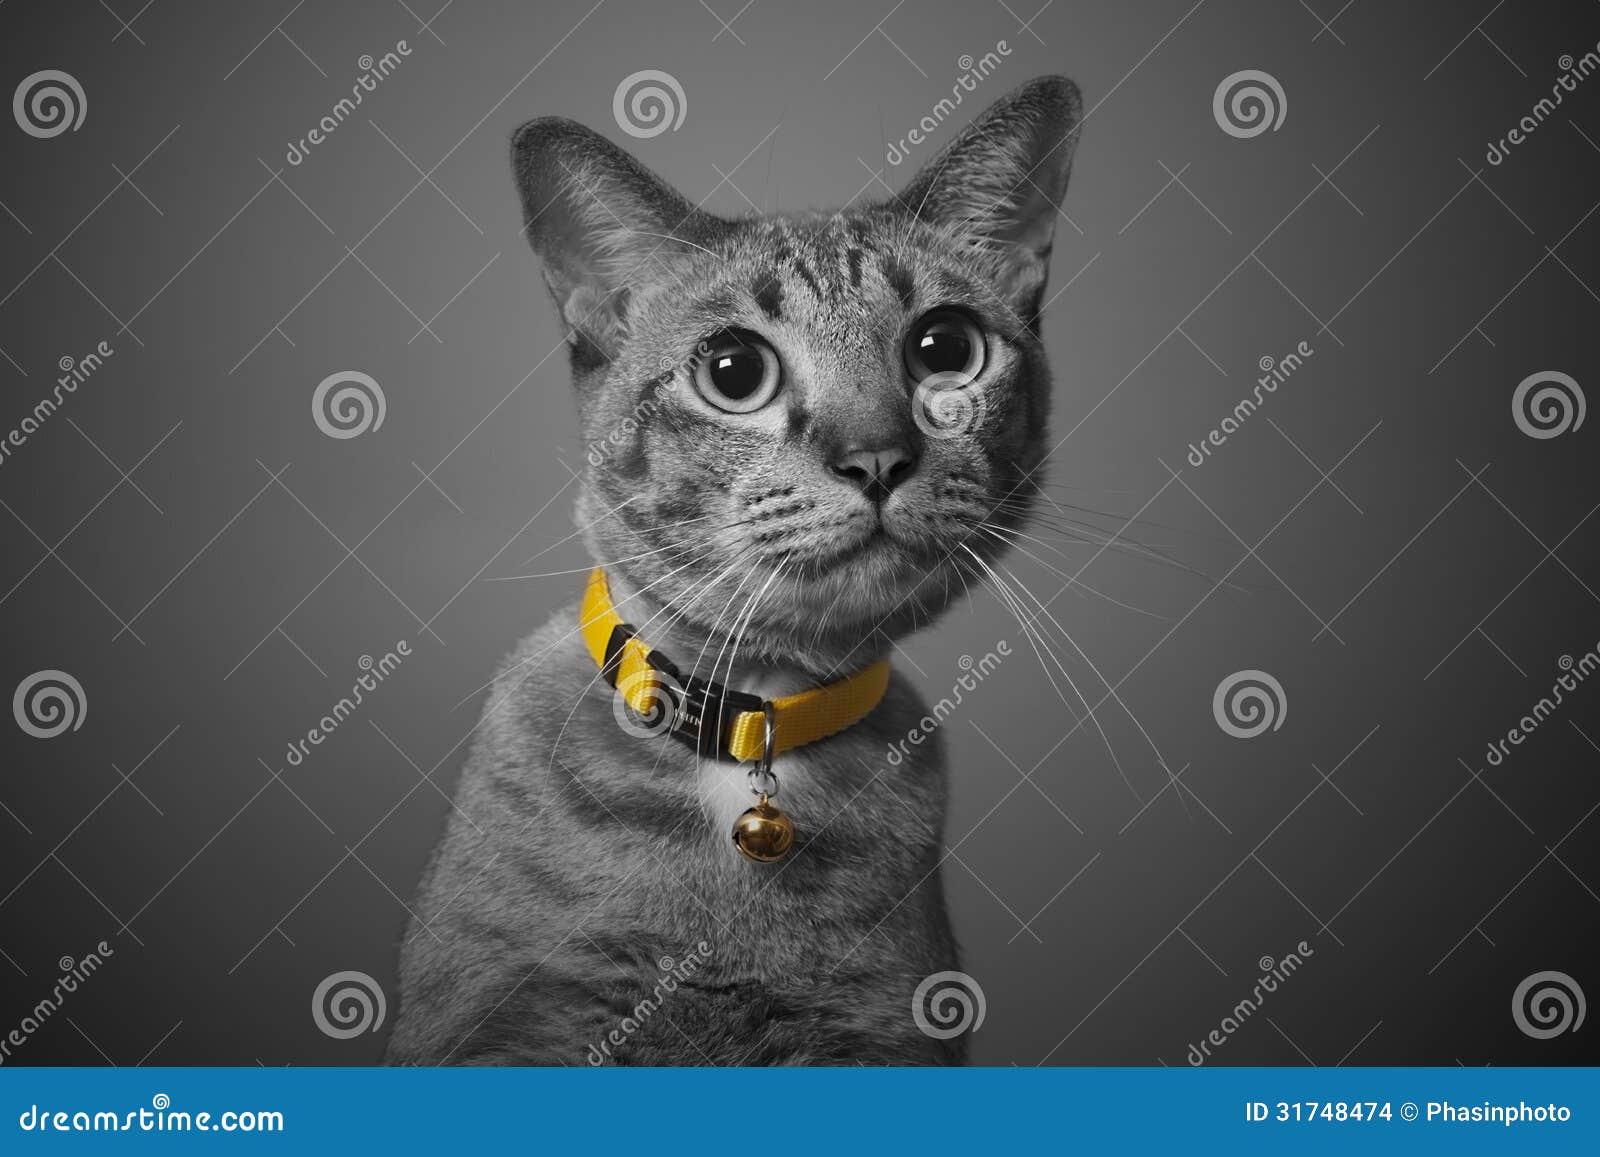 gray cat collar